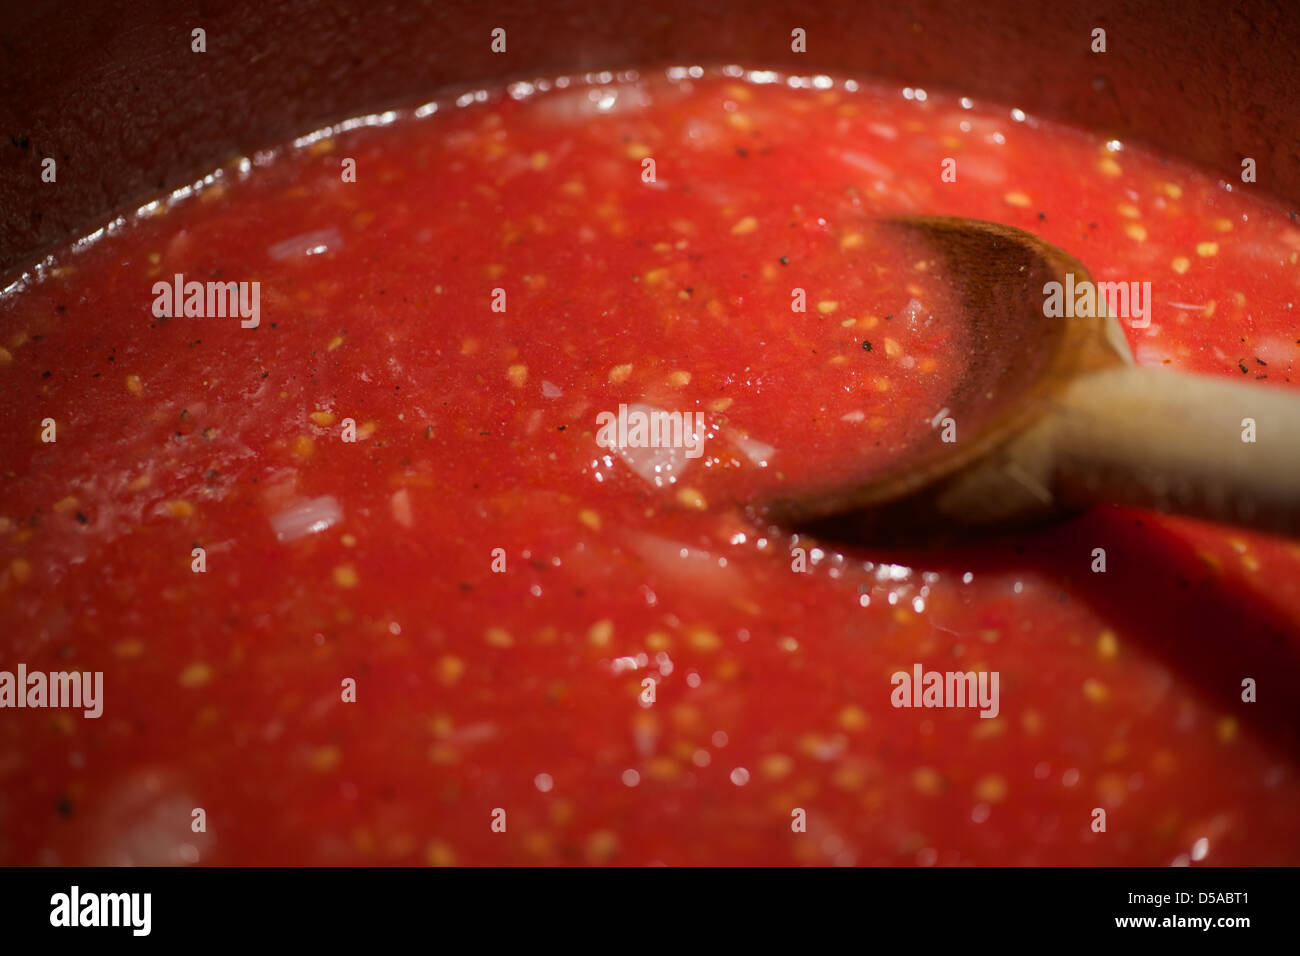 Simmering tomato sauce. Stock Photo